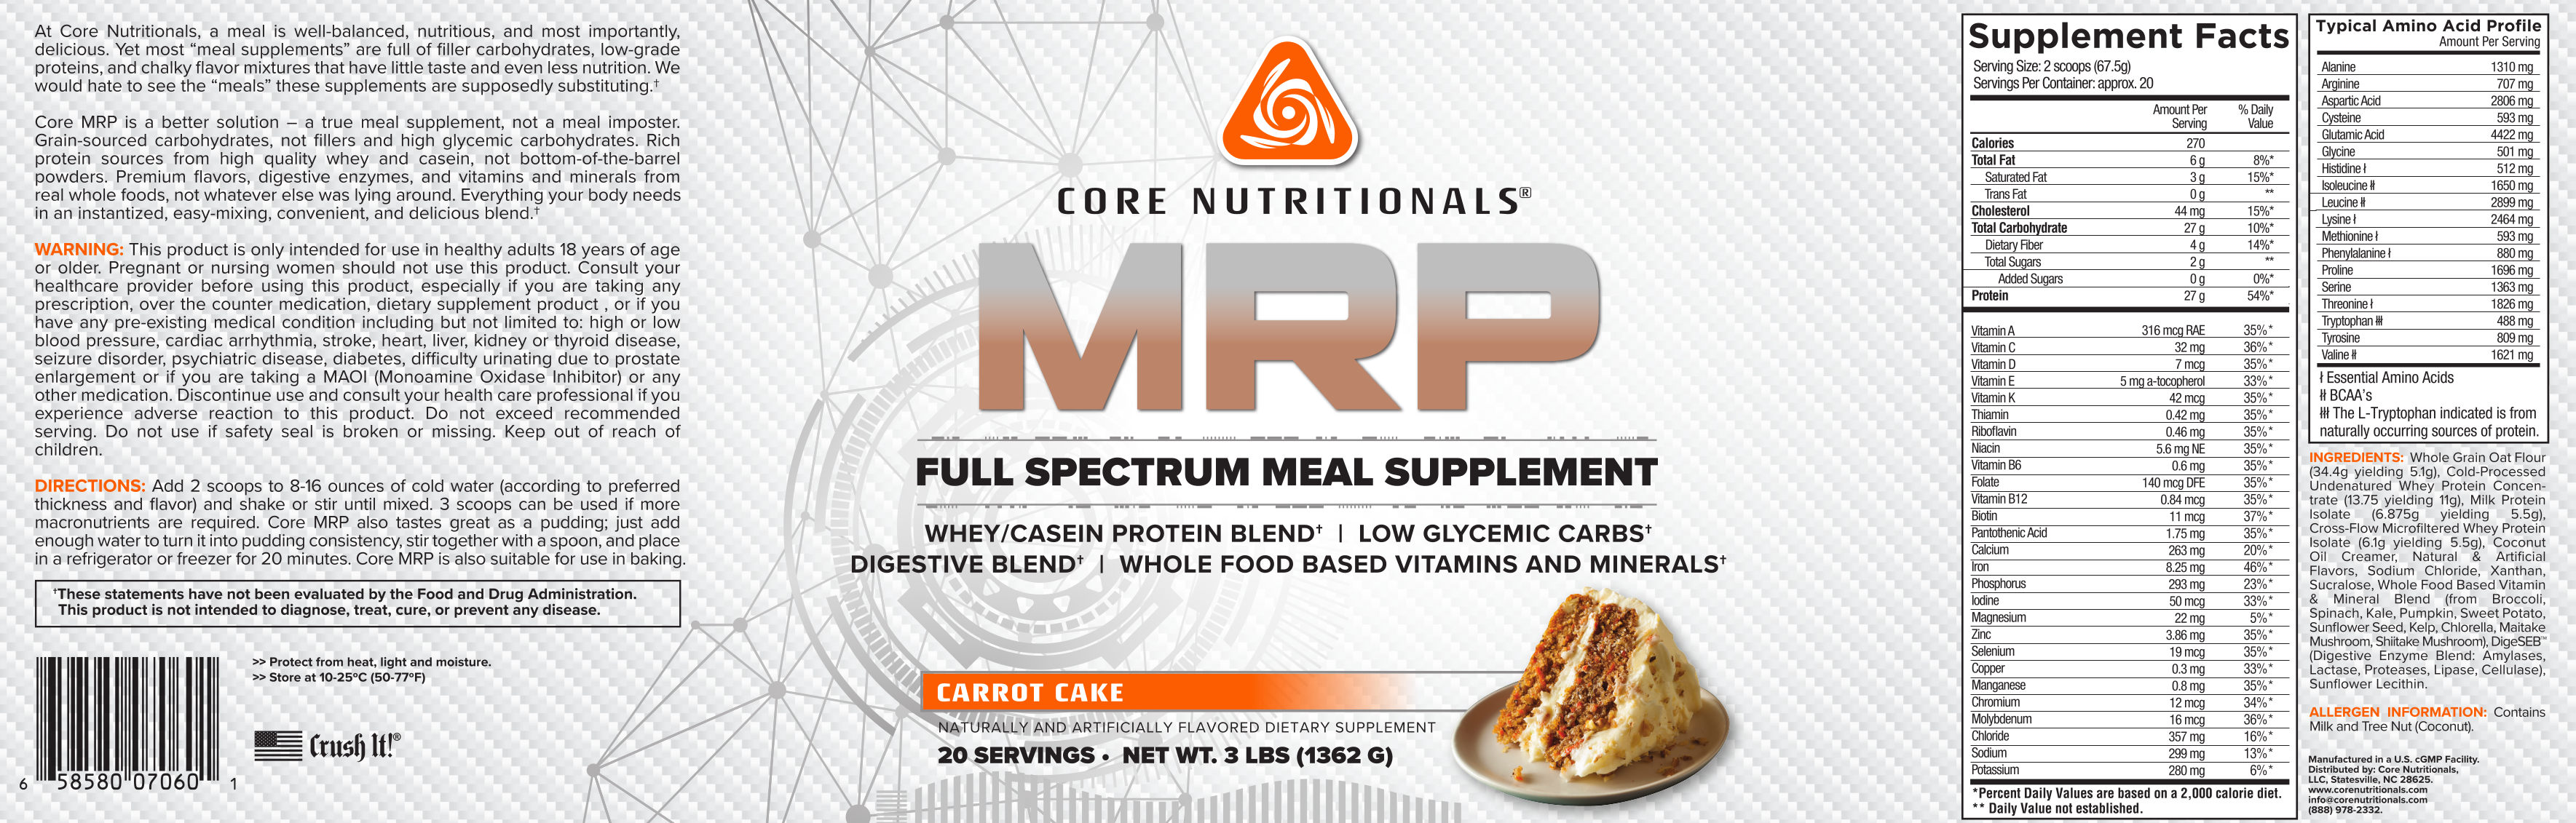 Core MRP Carrot Cake Label